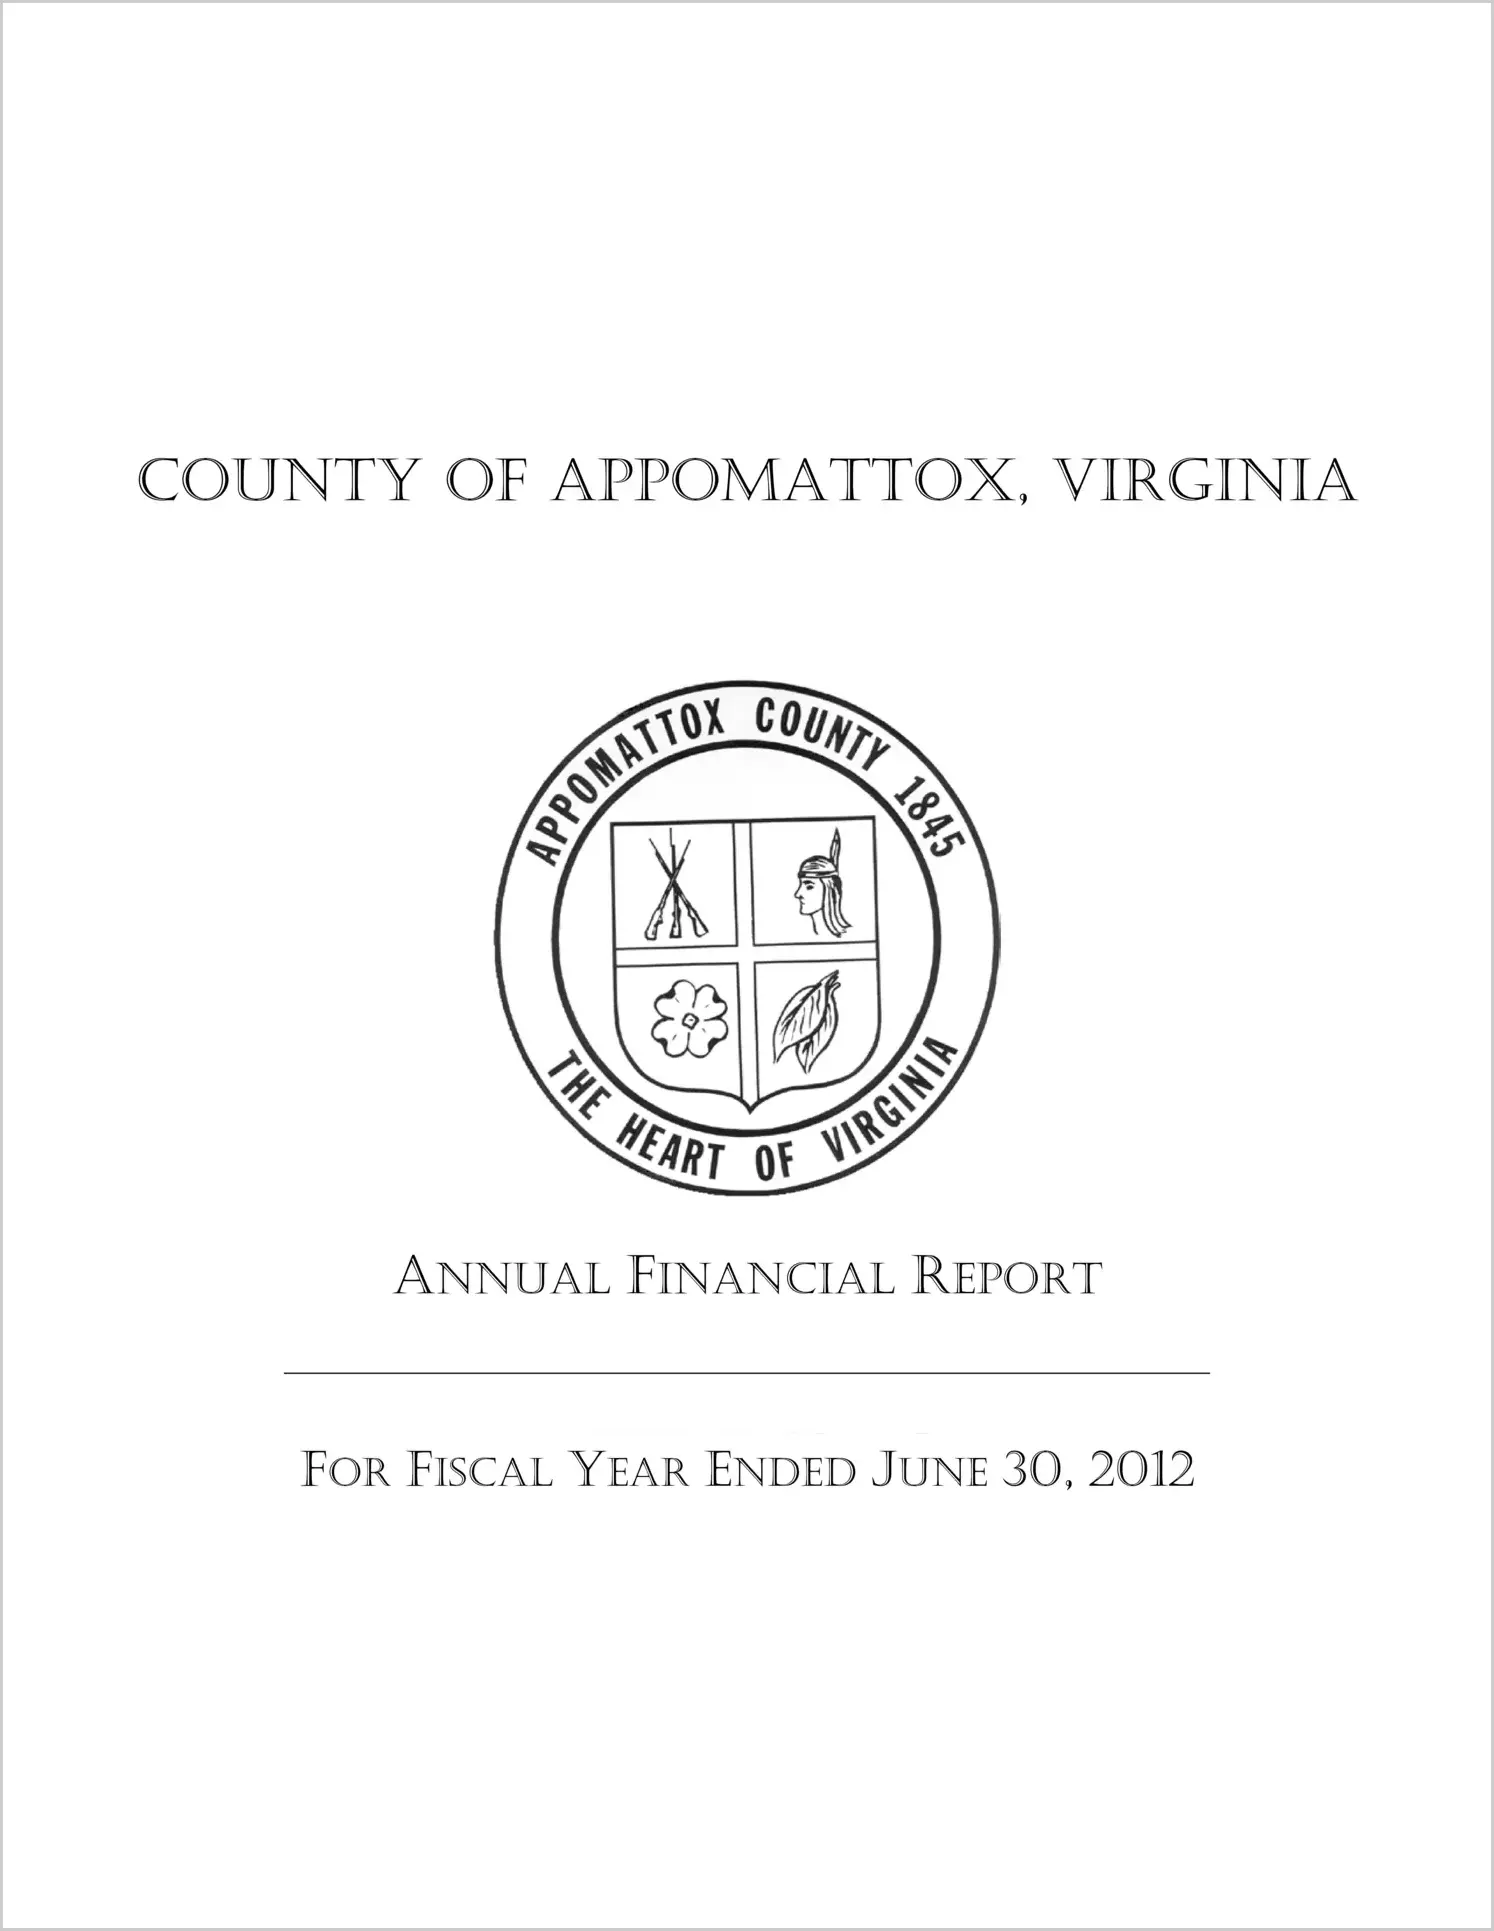 2012 Annual Financial Report for County of Appomattox